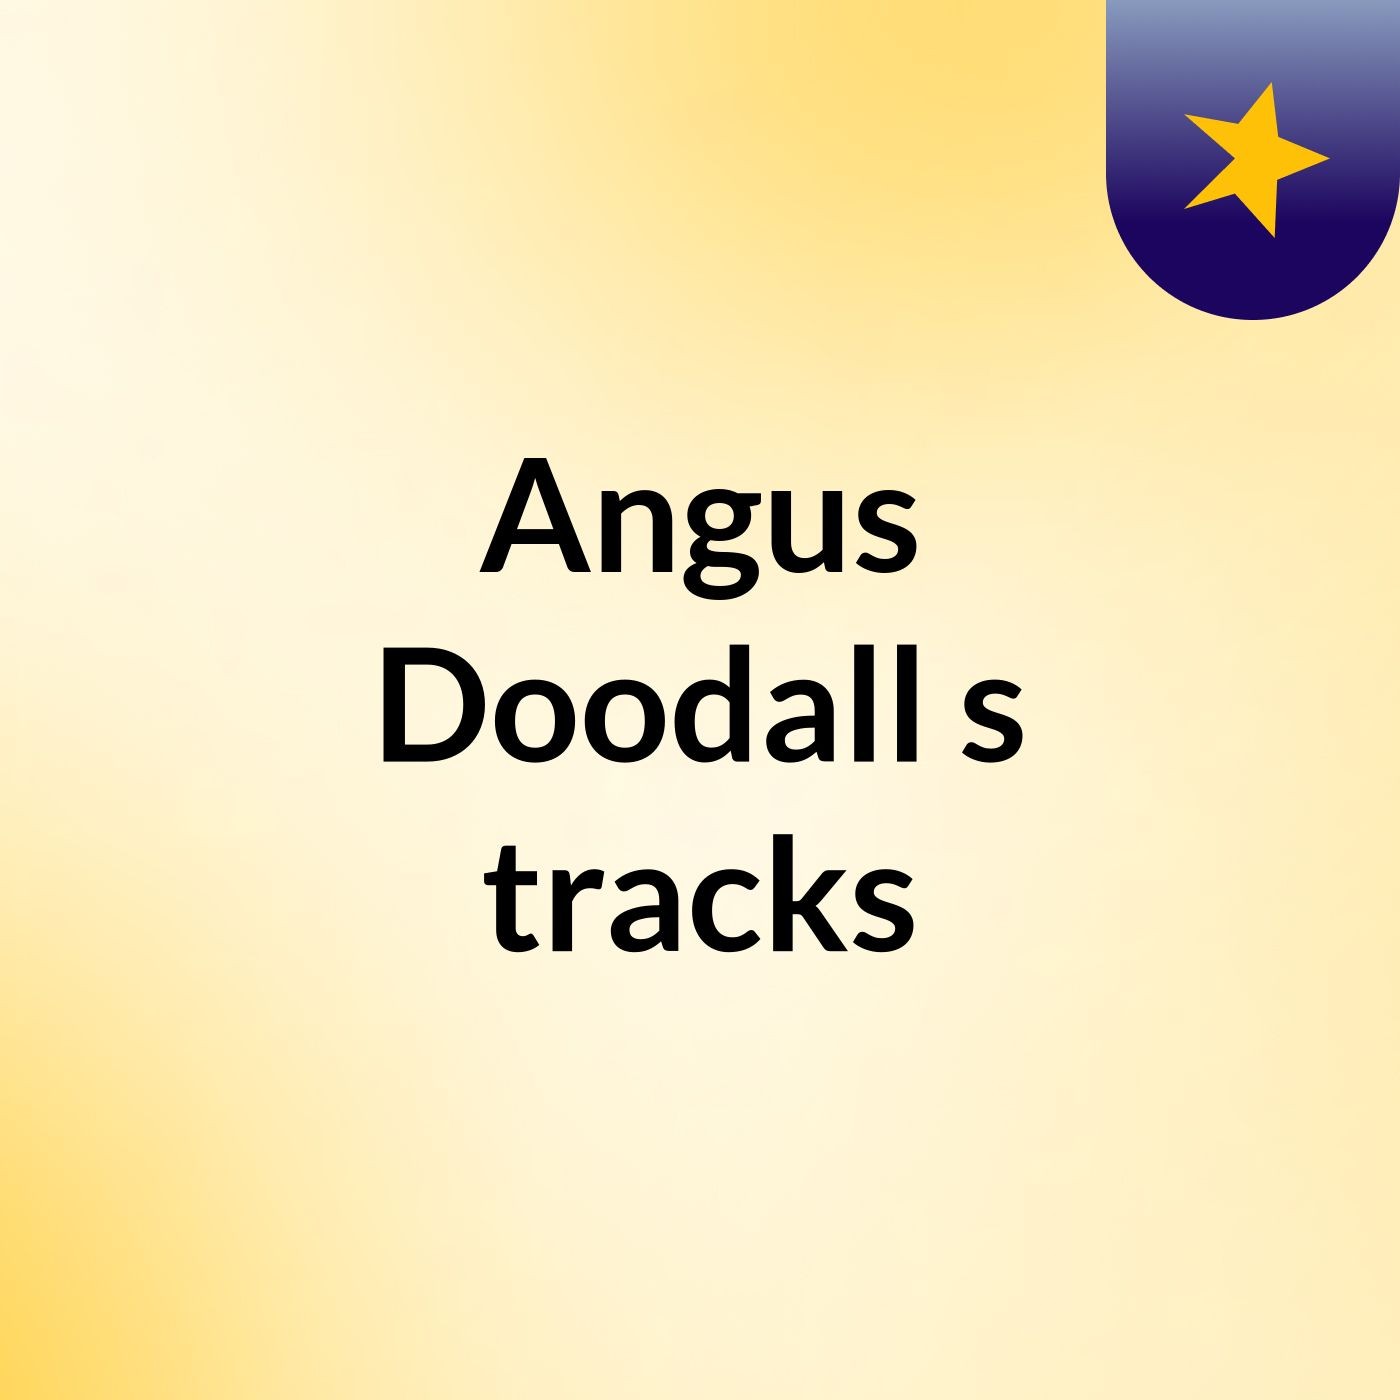 Angus Doodall's tracks